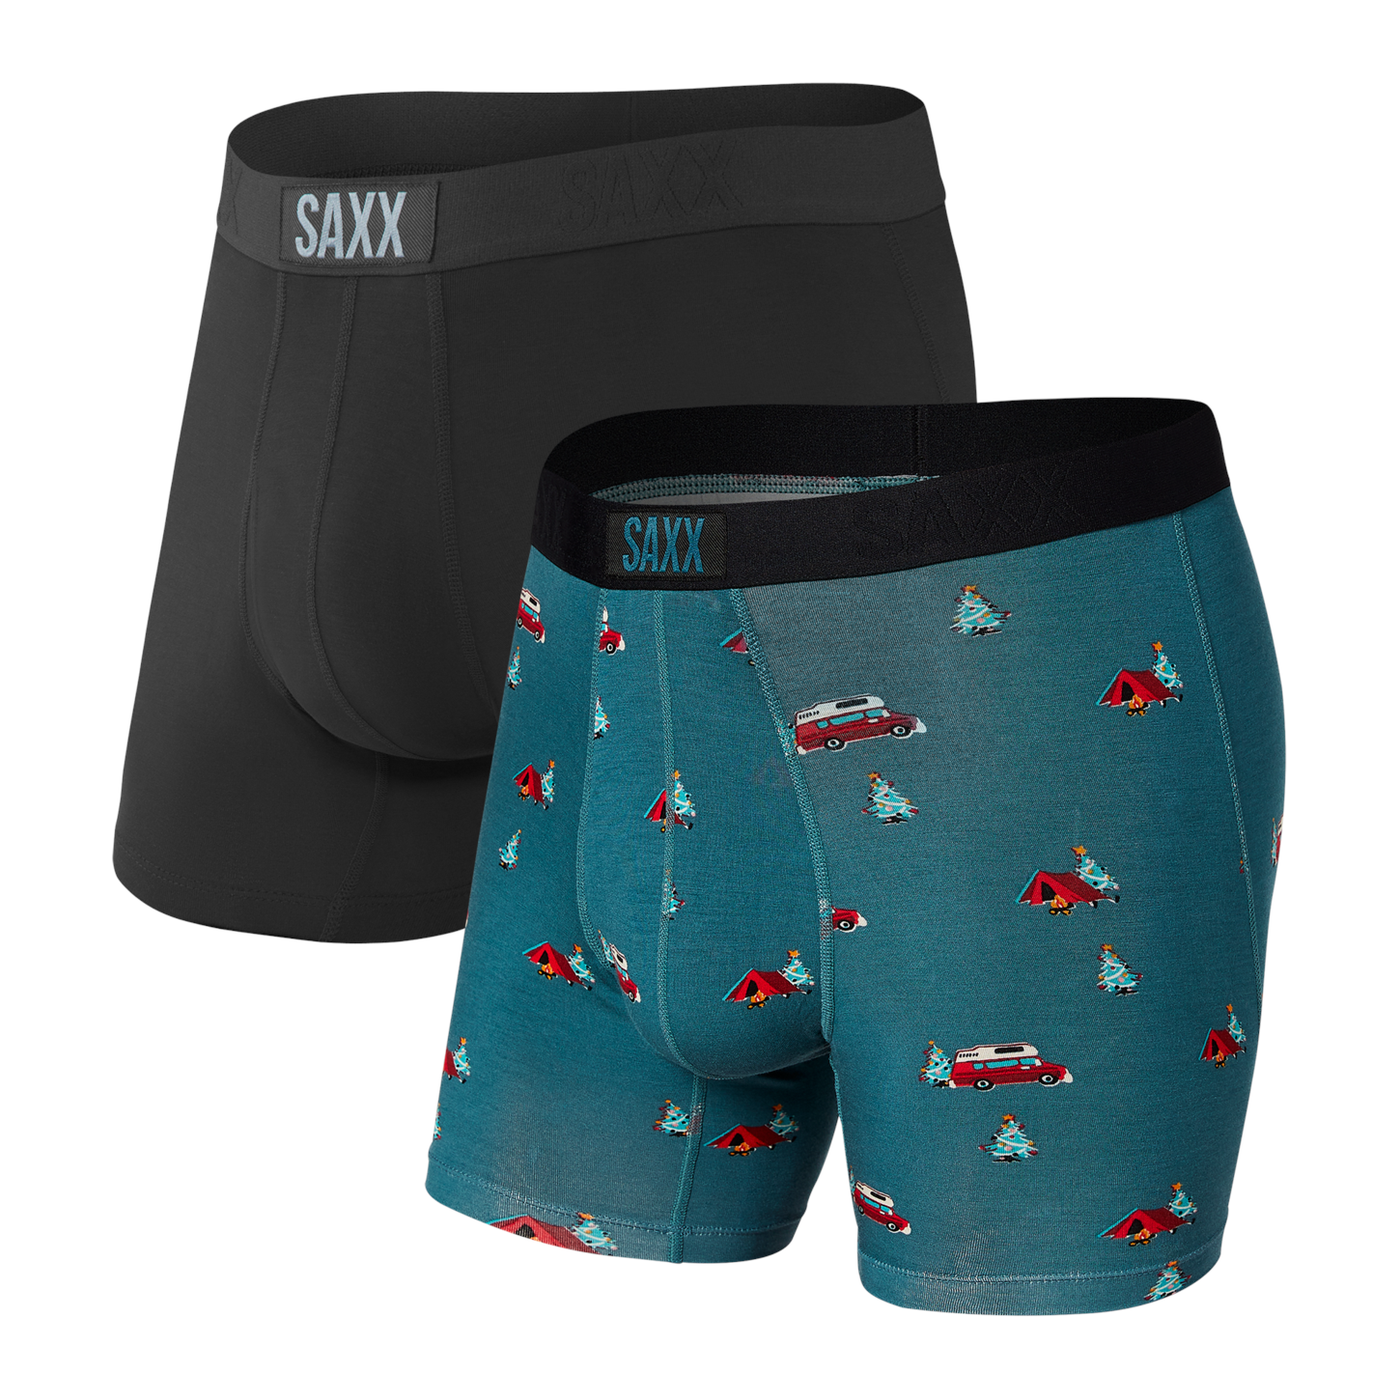 Gotstyle Fashion - Saxx Underwear Vibe Boxer Modern Fit 2 Pack - Woodsy Holiday / Buffalo